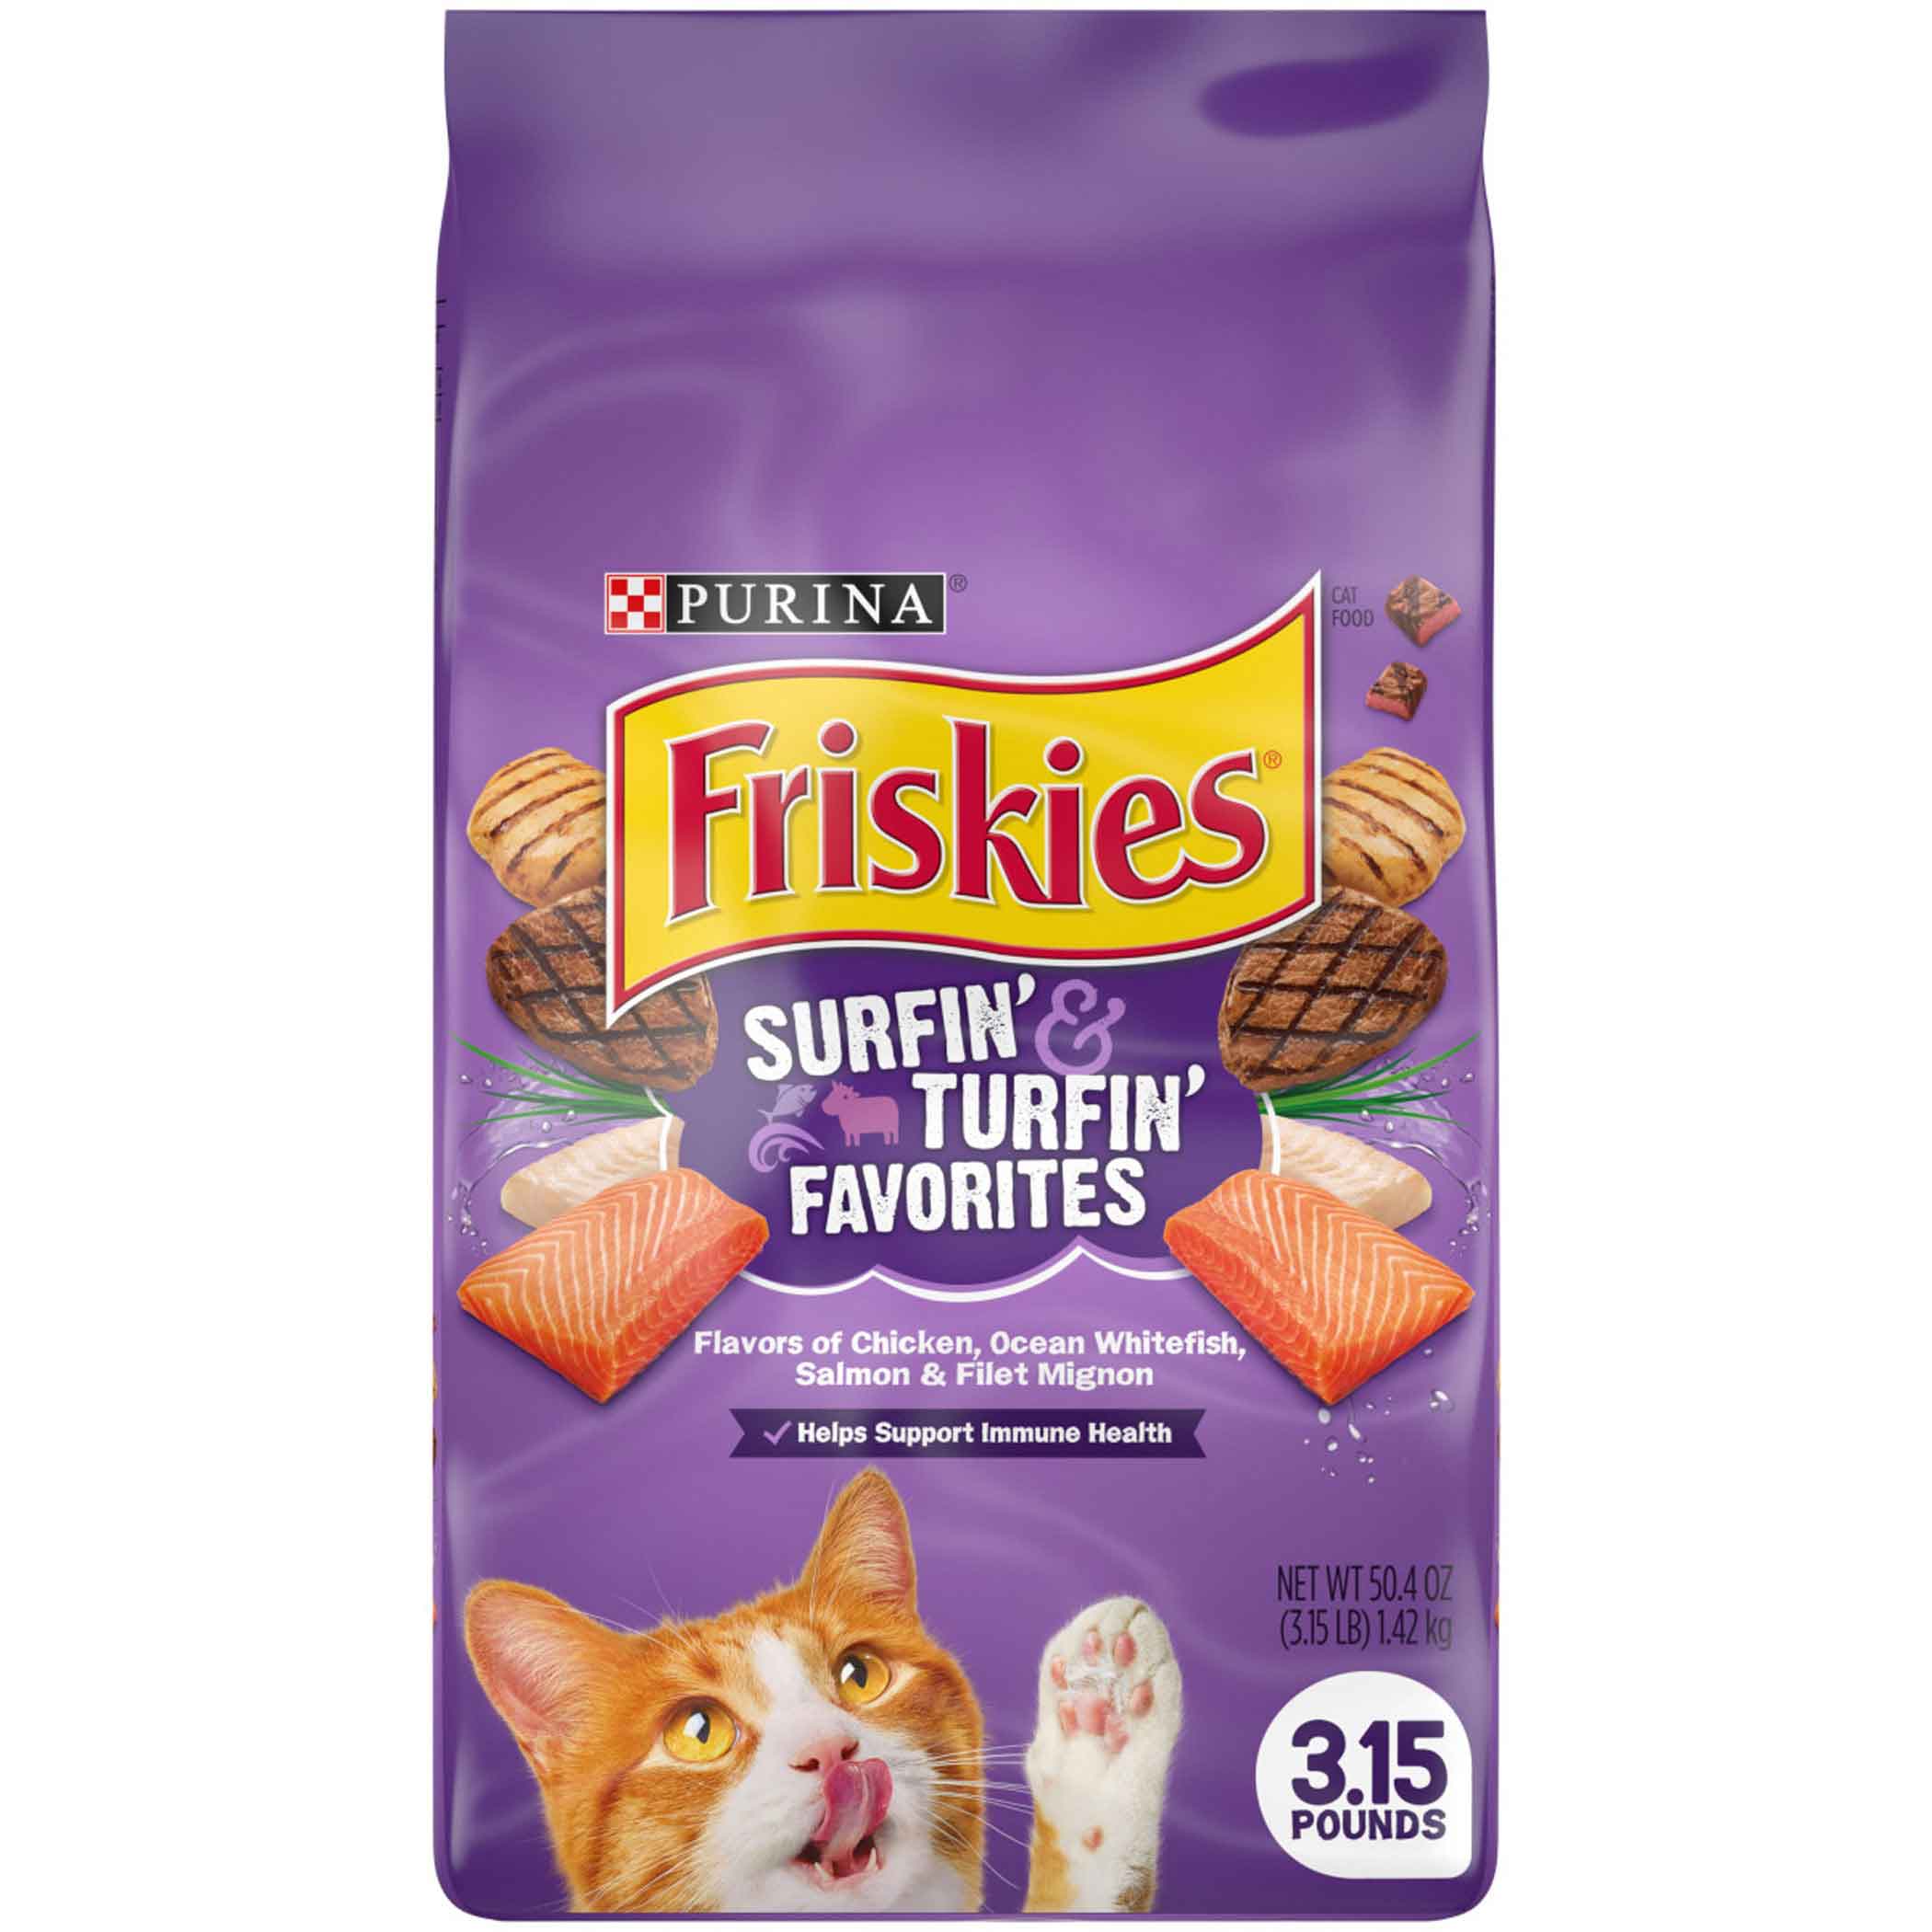 Purina Friskies Dry Cat Food, Surfin' & Turfin' Favorites - 3.15 Pound Bag